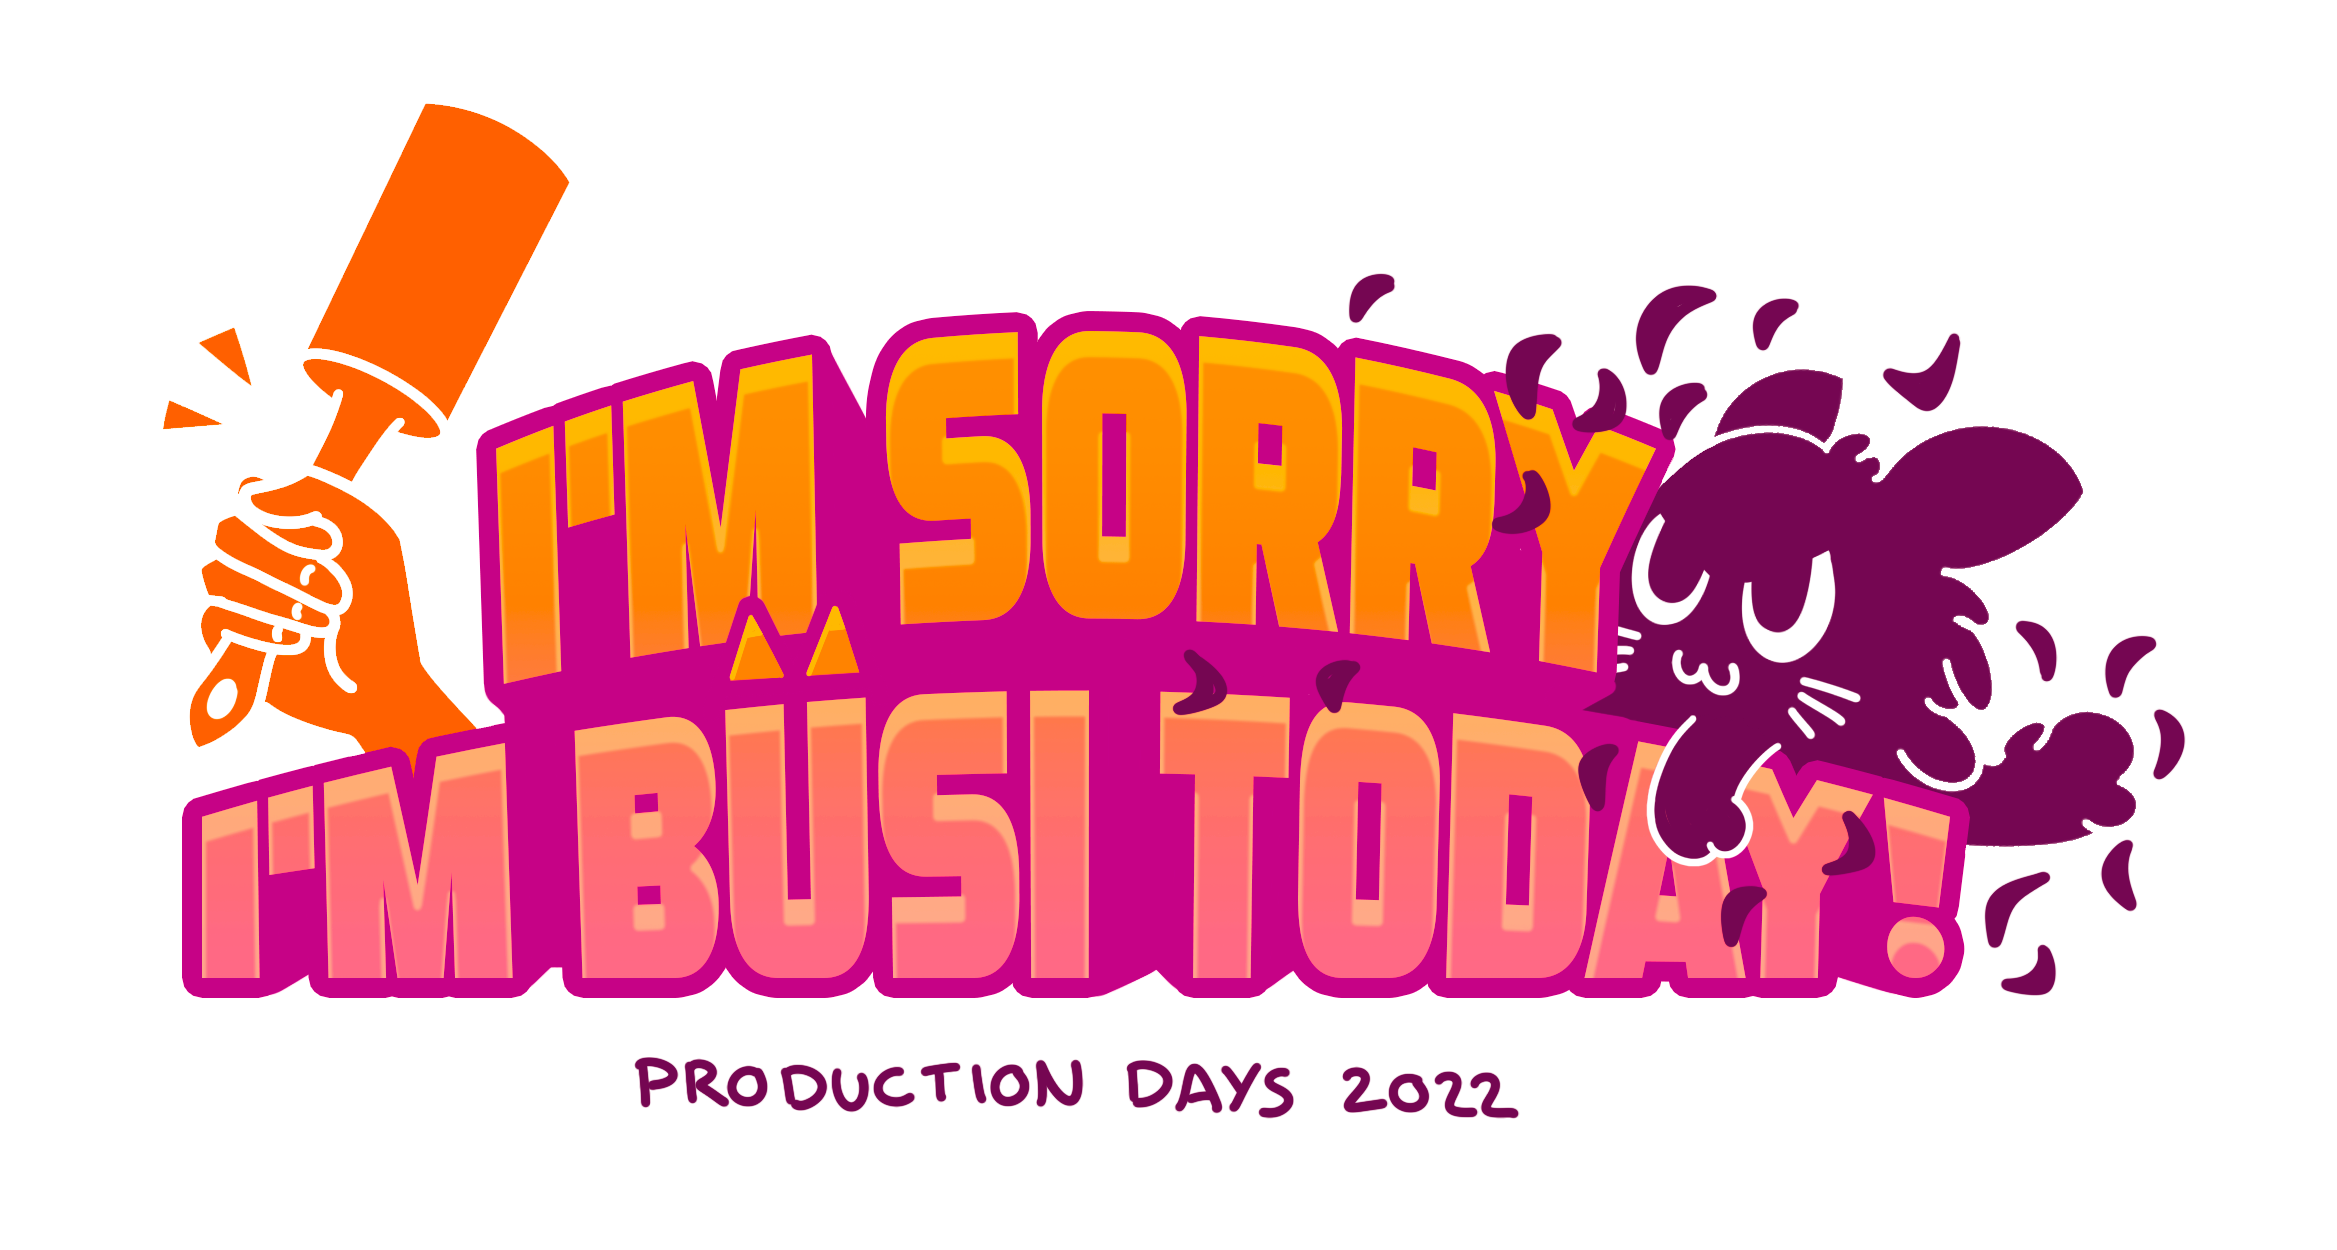 I'm Sorry I'm Büsi Today!